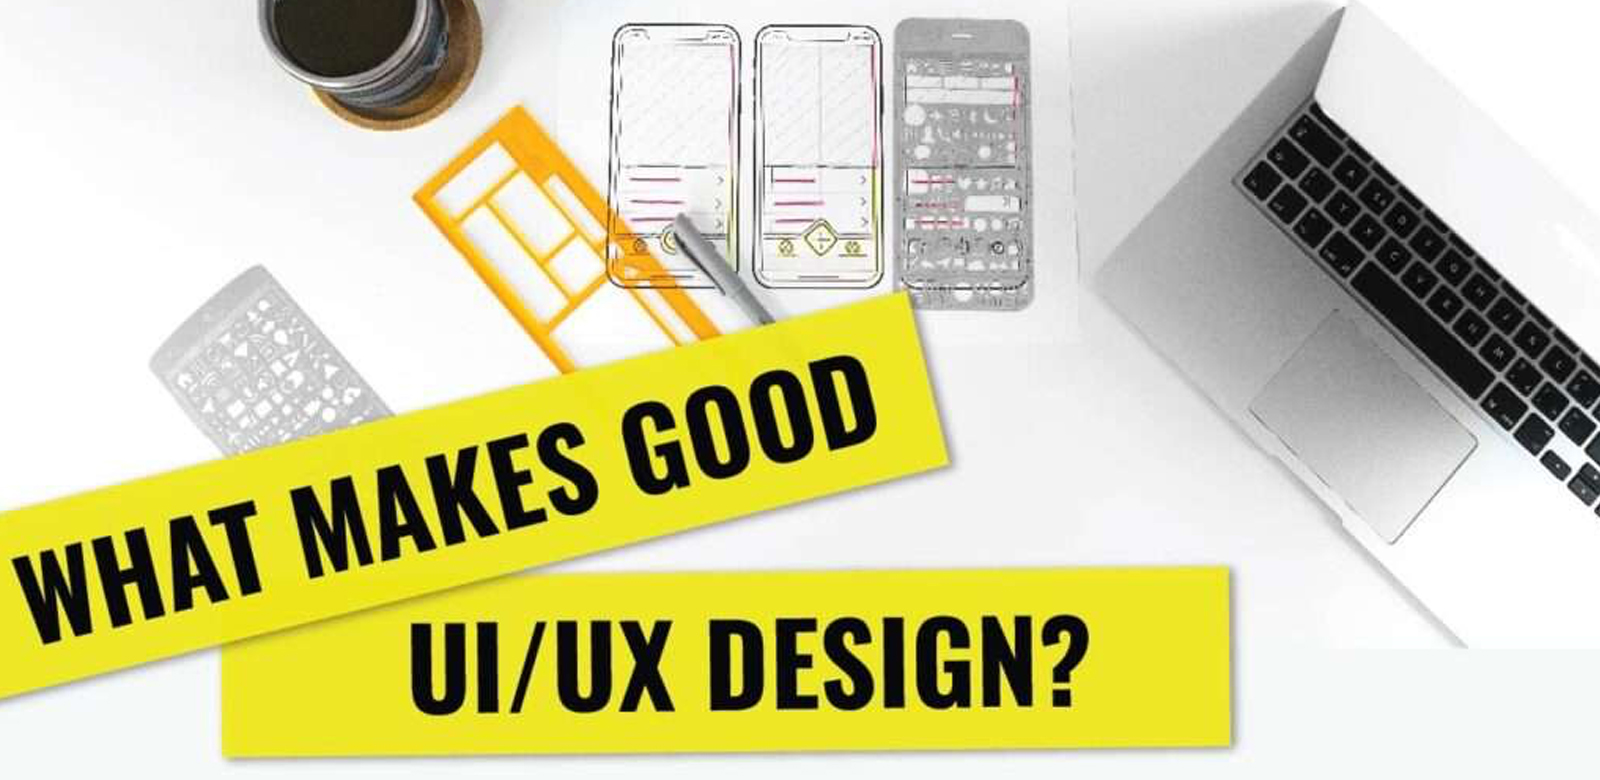 What Makes A Good UI-UX Design